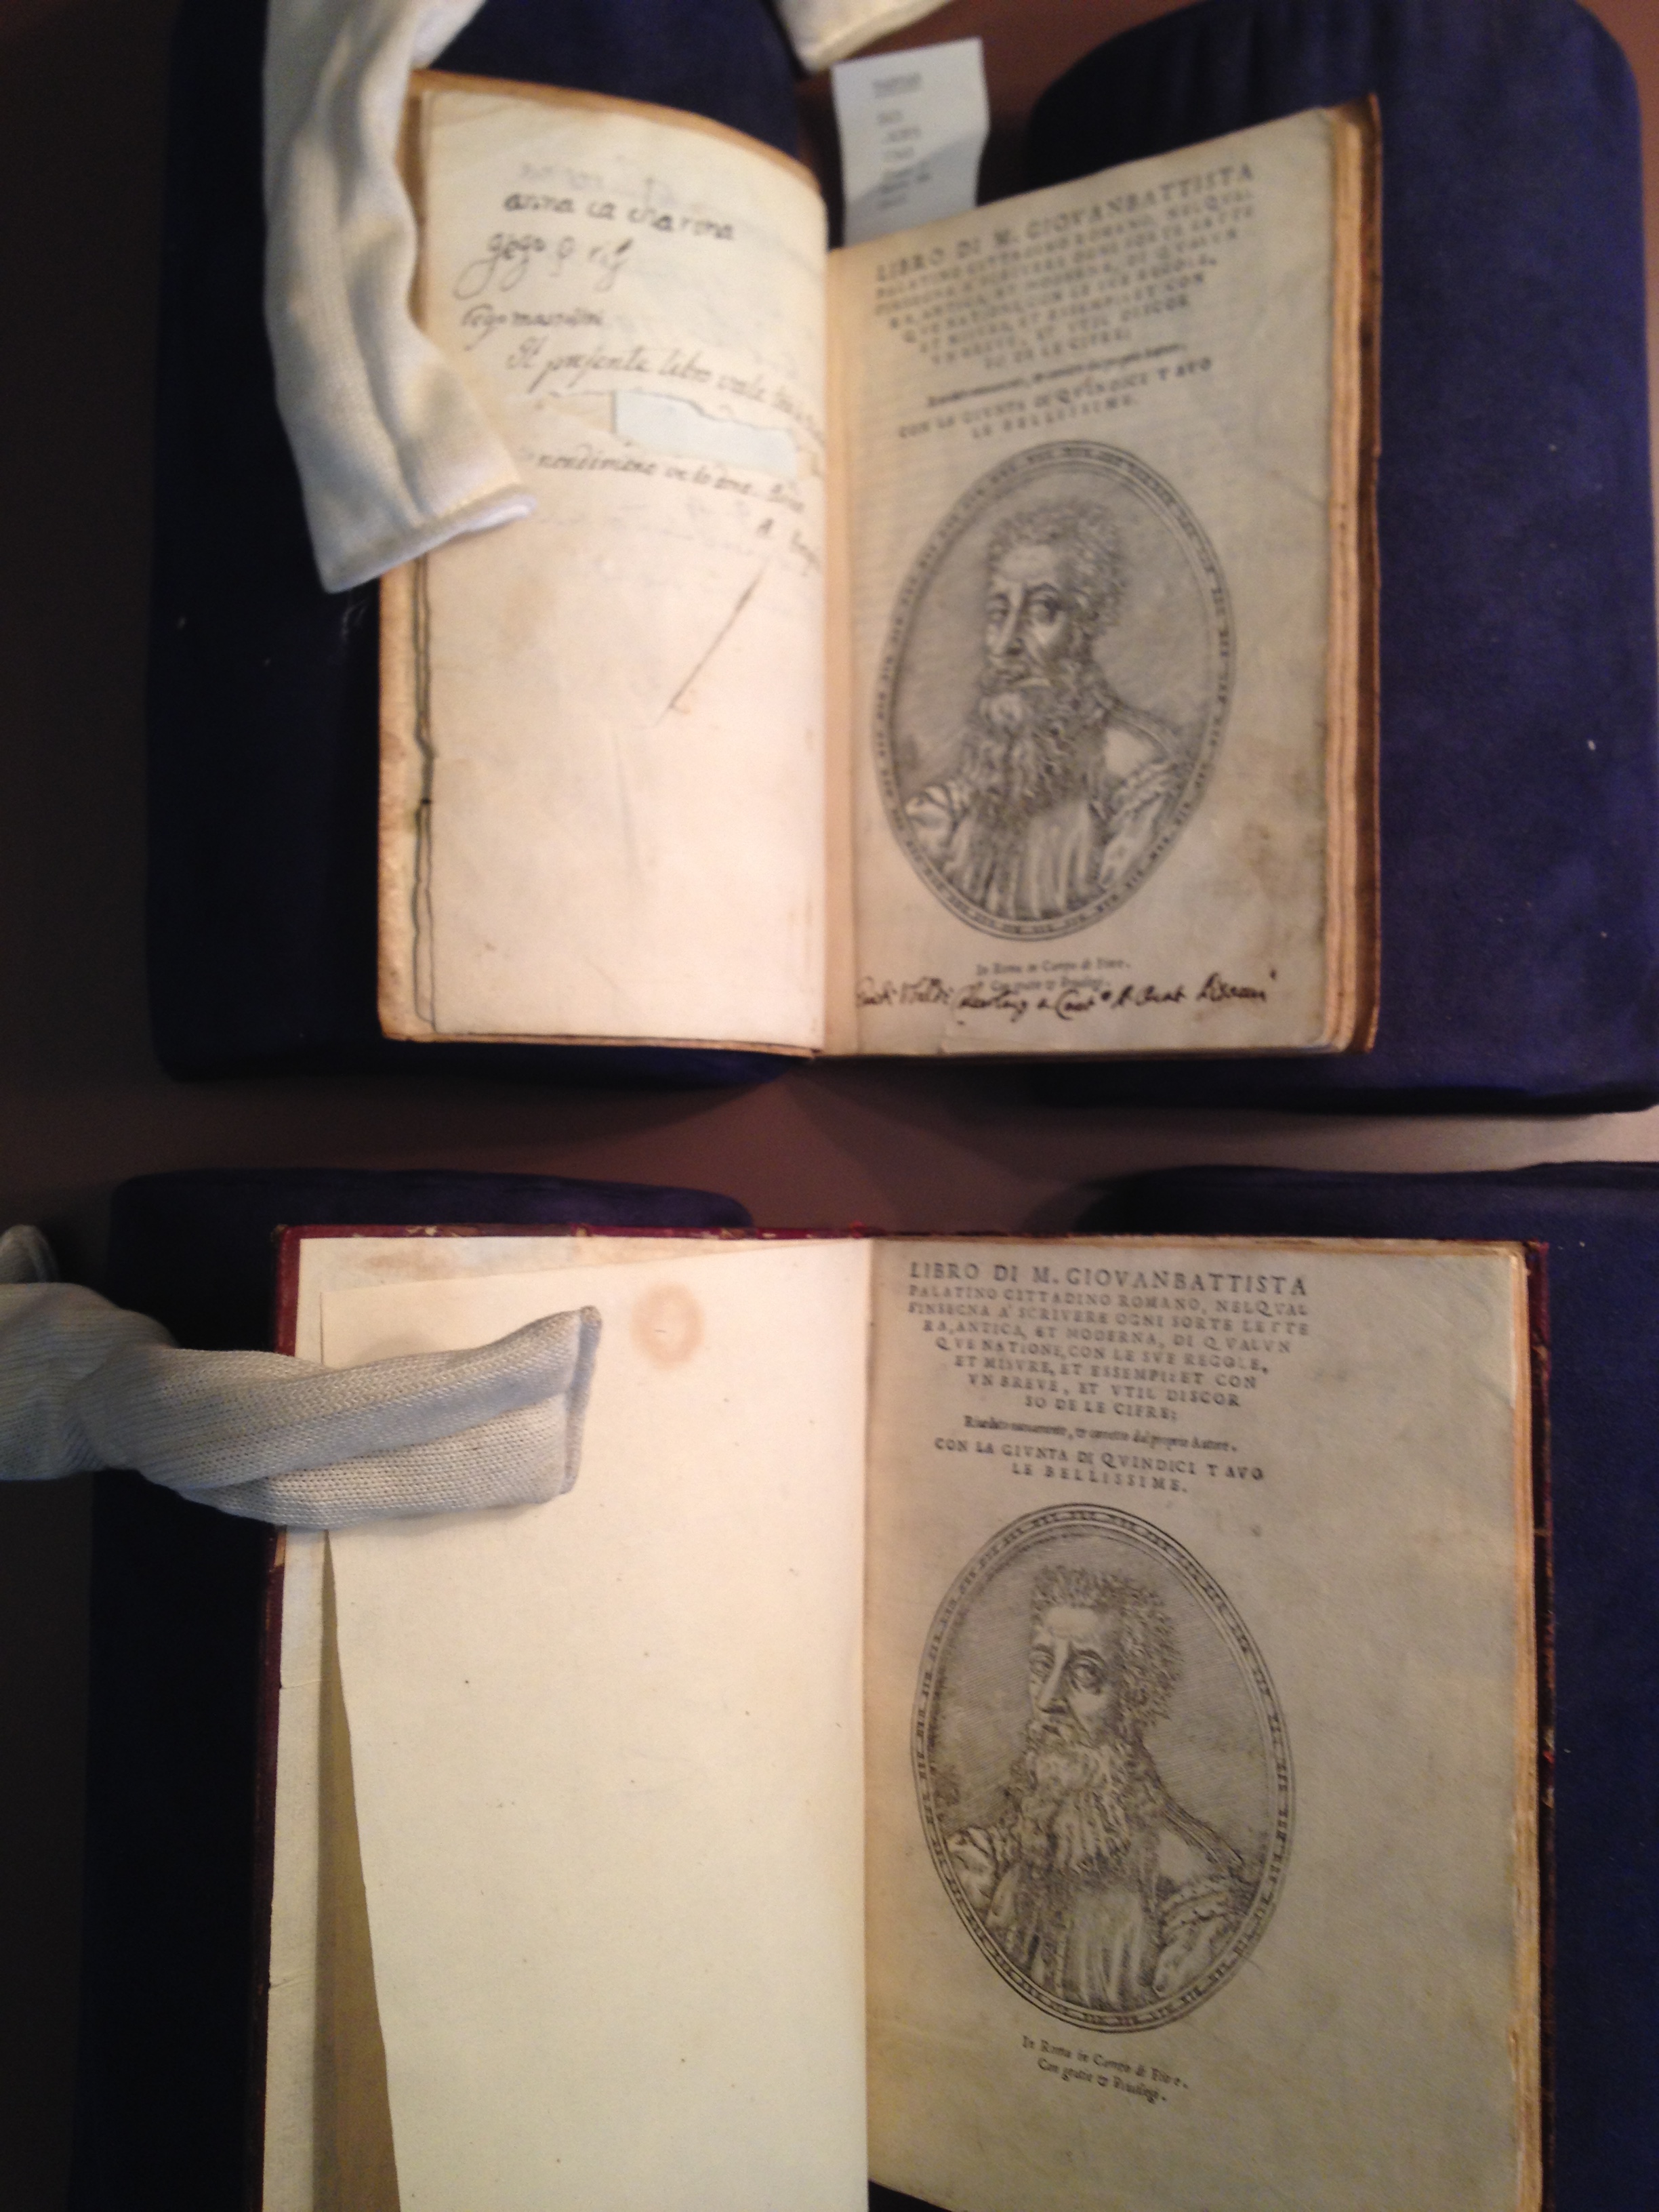 Palatino's Libro nuovo d’imparare a scrivere Z43.A3 P3 1545 Fabyan (top) Rosenwald (bottom)